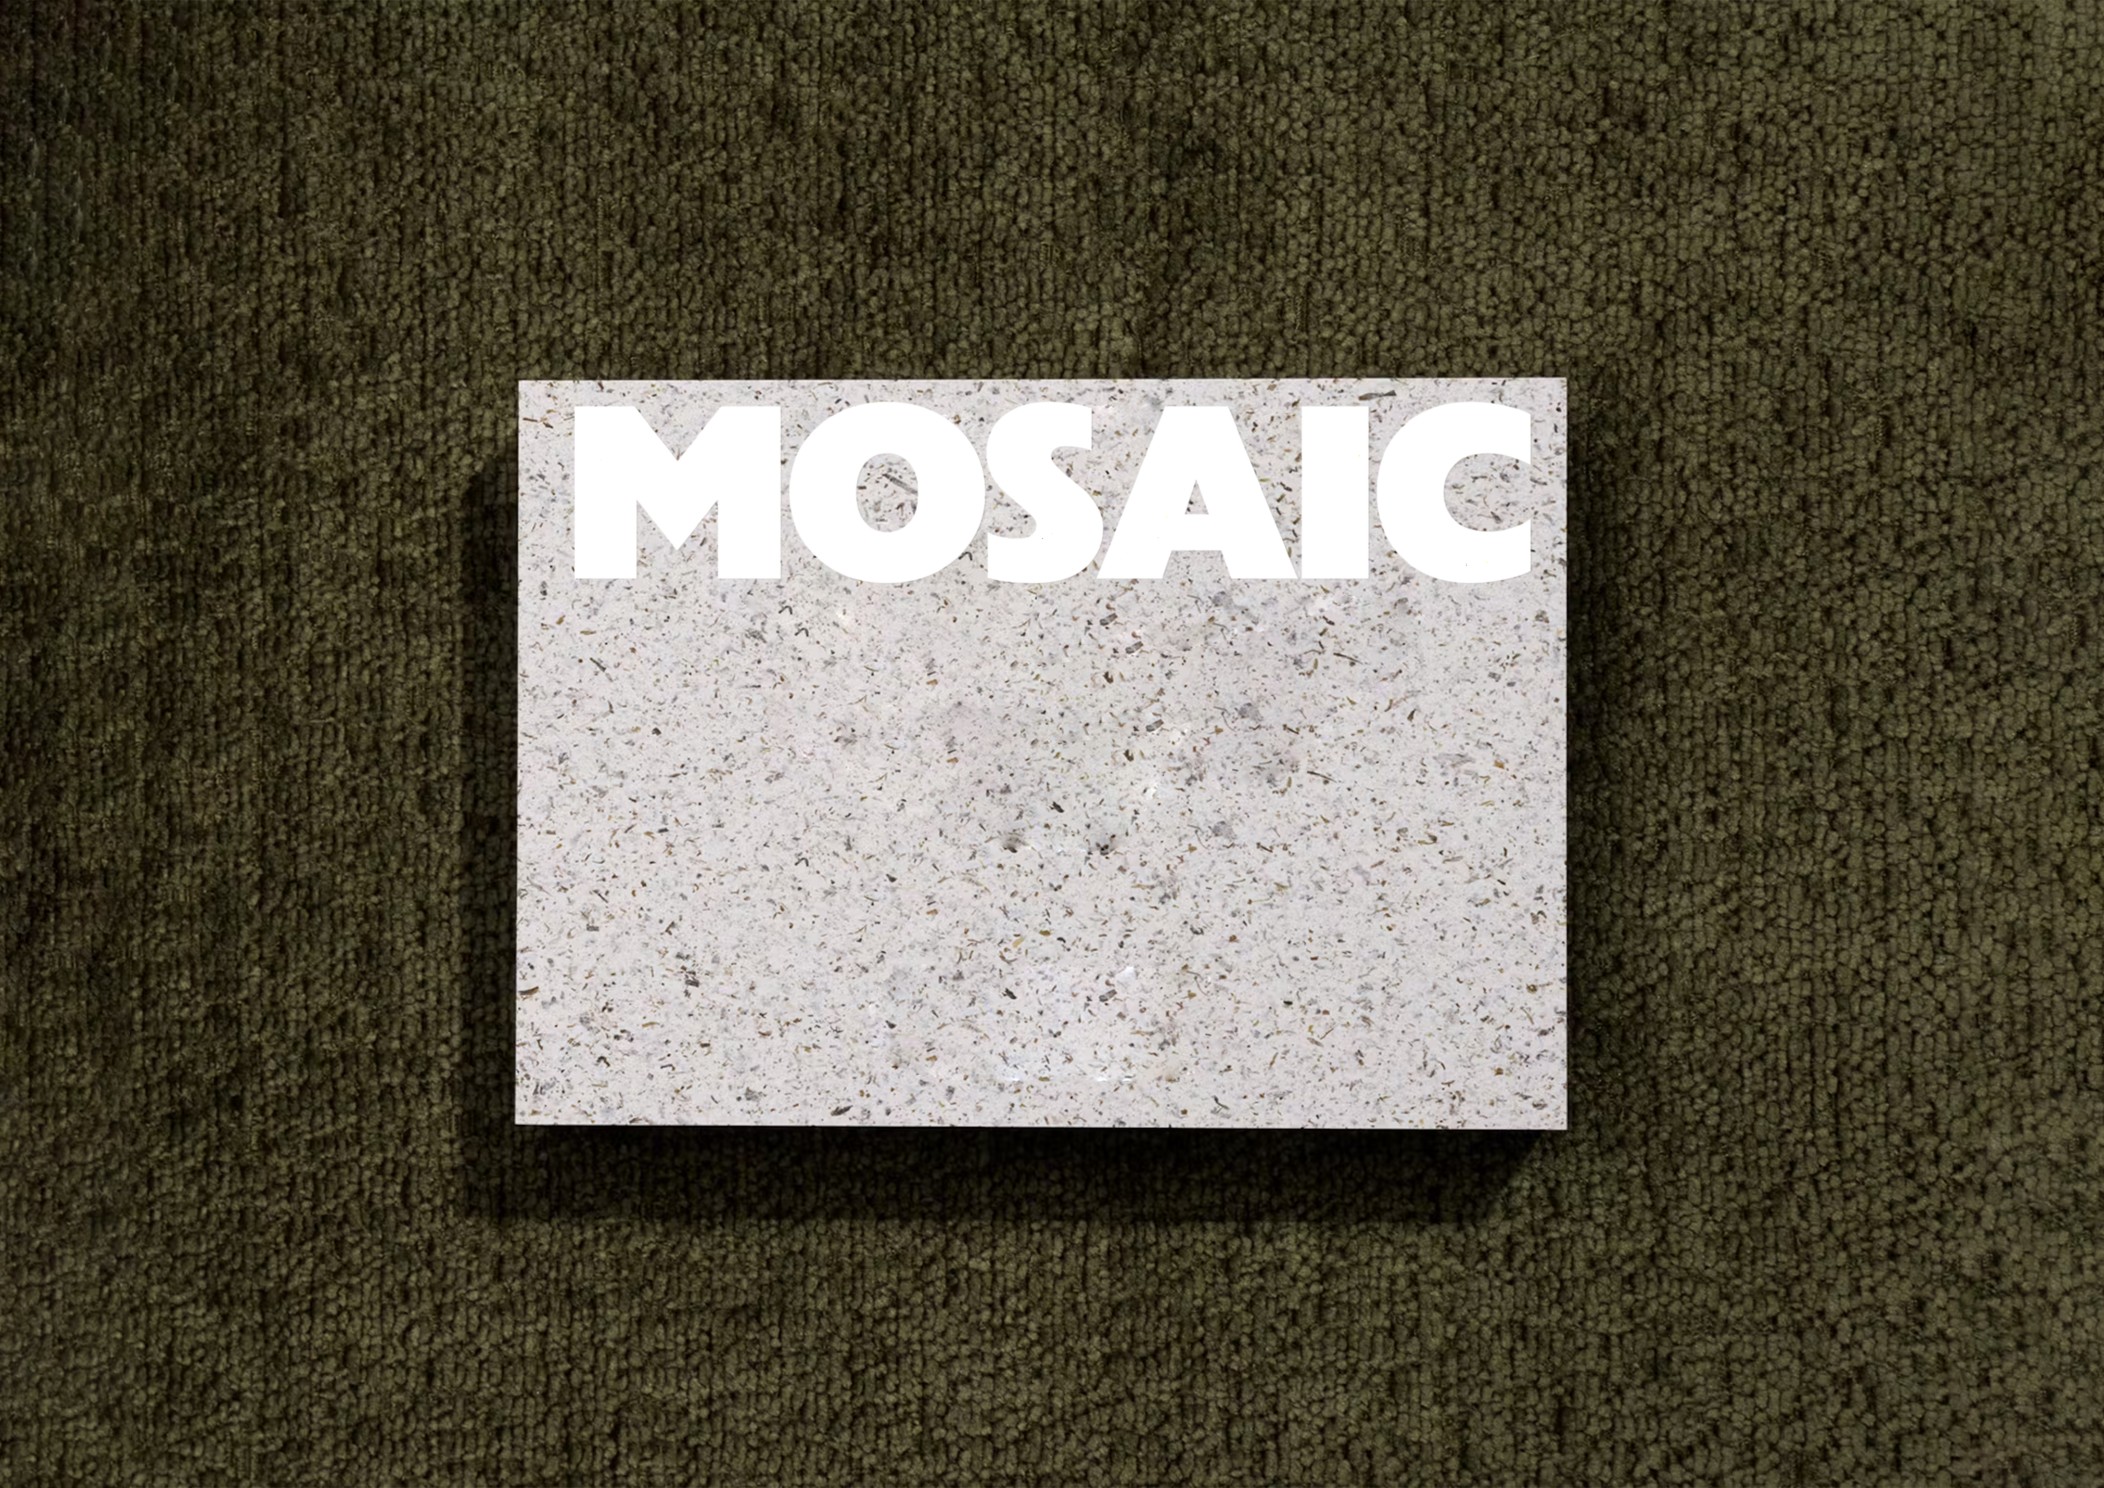 New Graphic Identity for Mosaic Studio by Disha Mallya